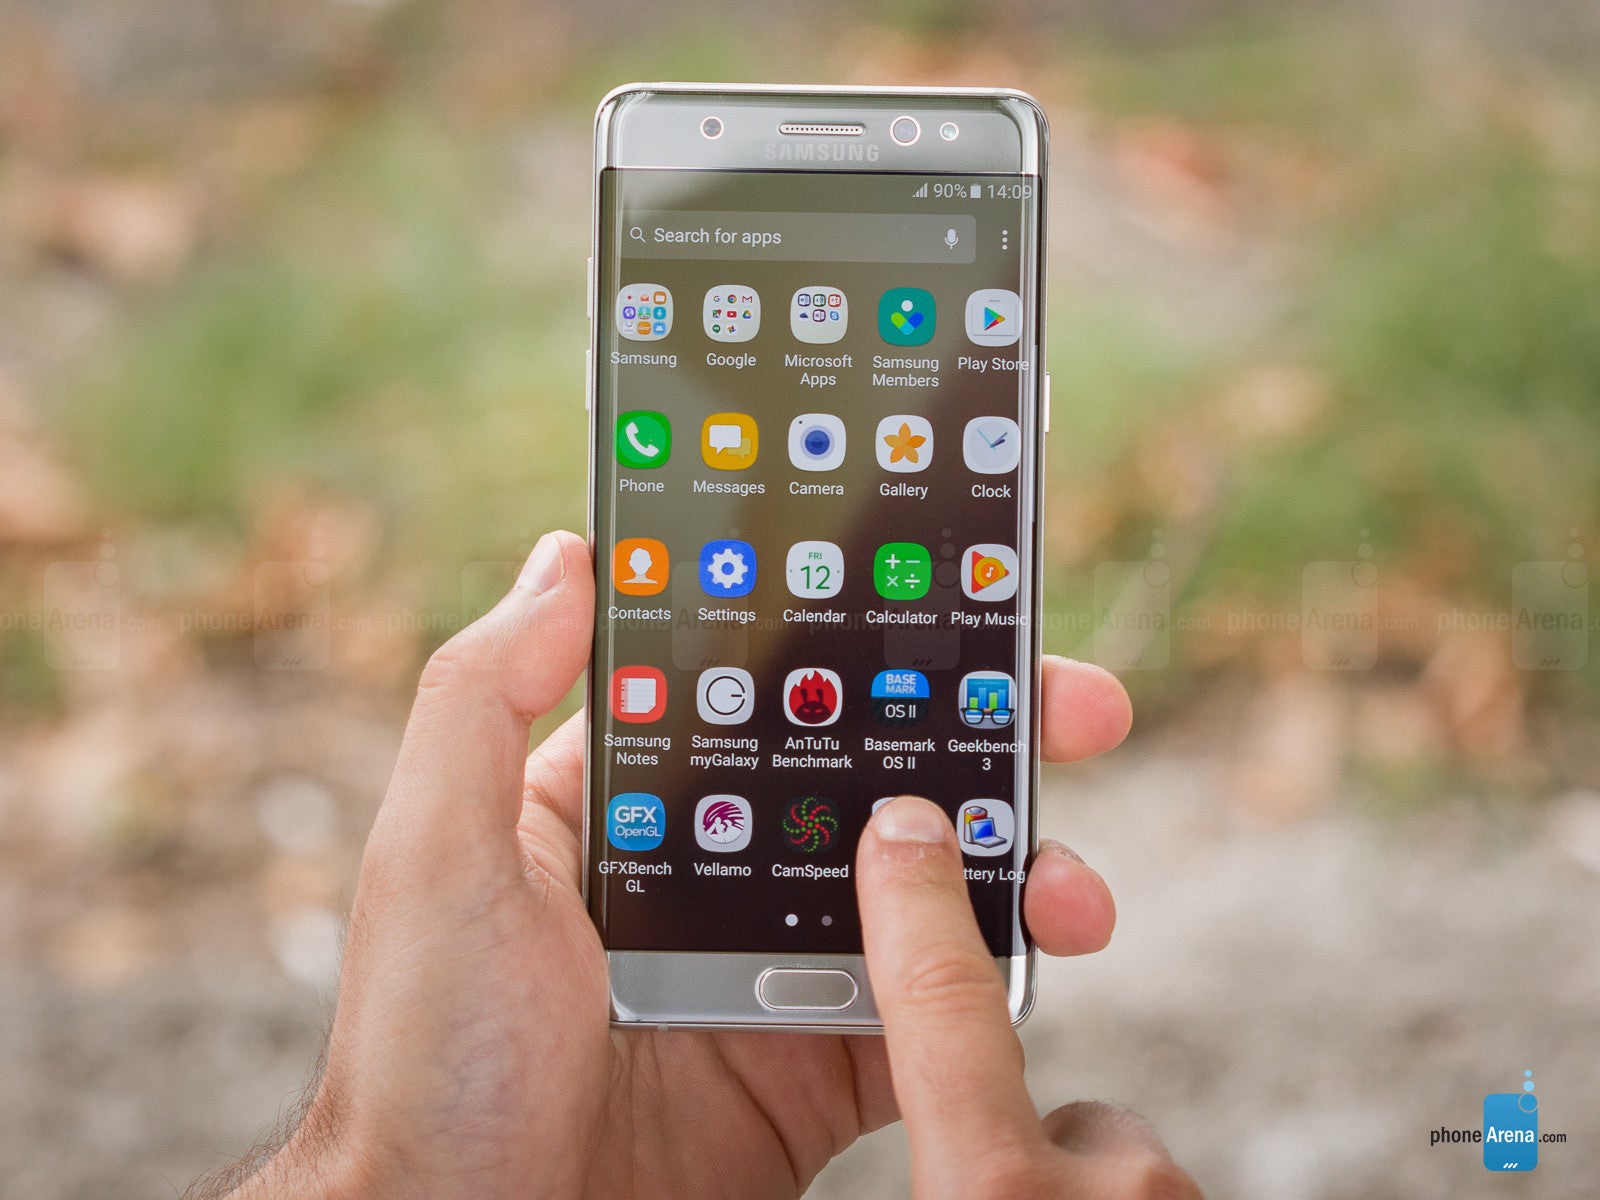 Despite Samsung's pleas many customers prefer to keep the Galaxy Note 7